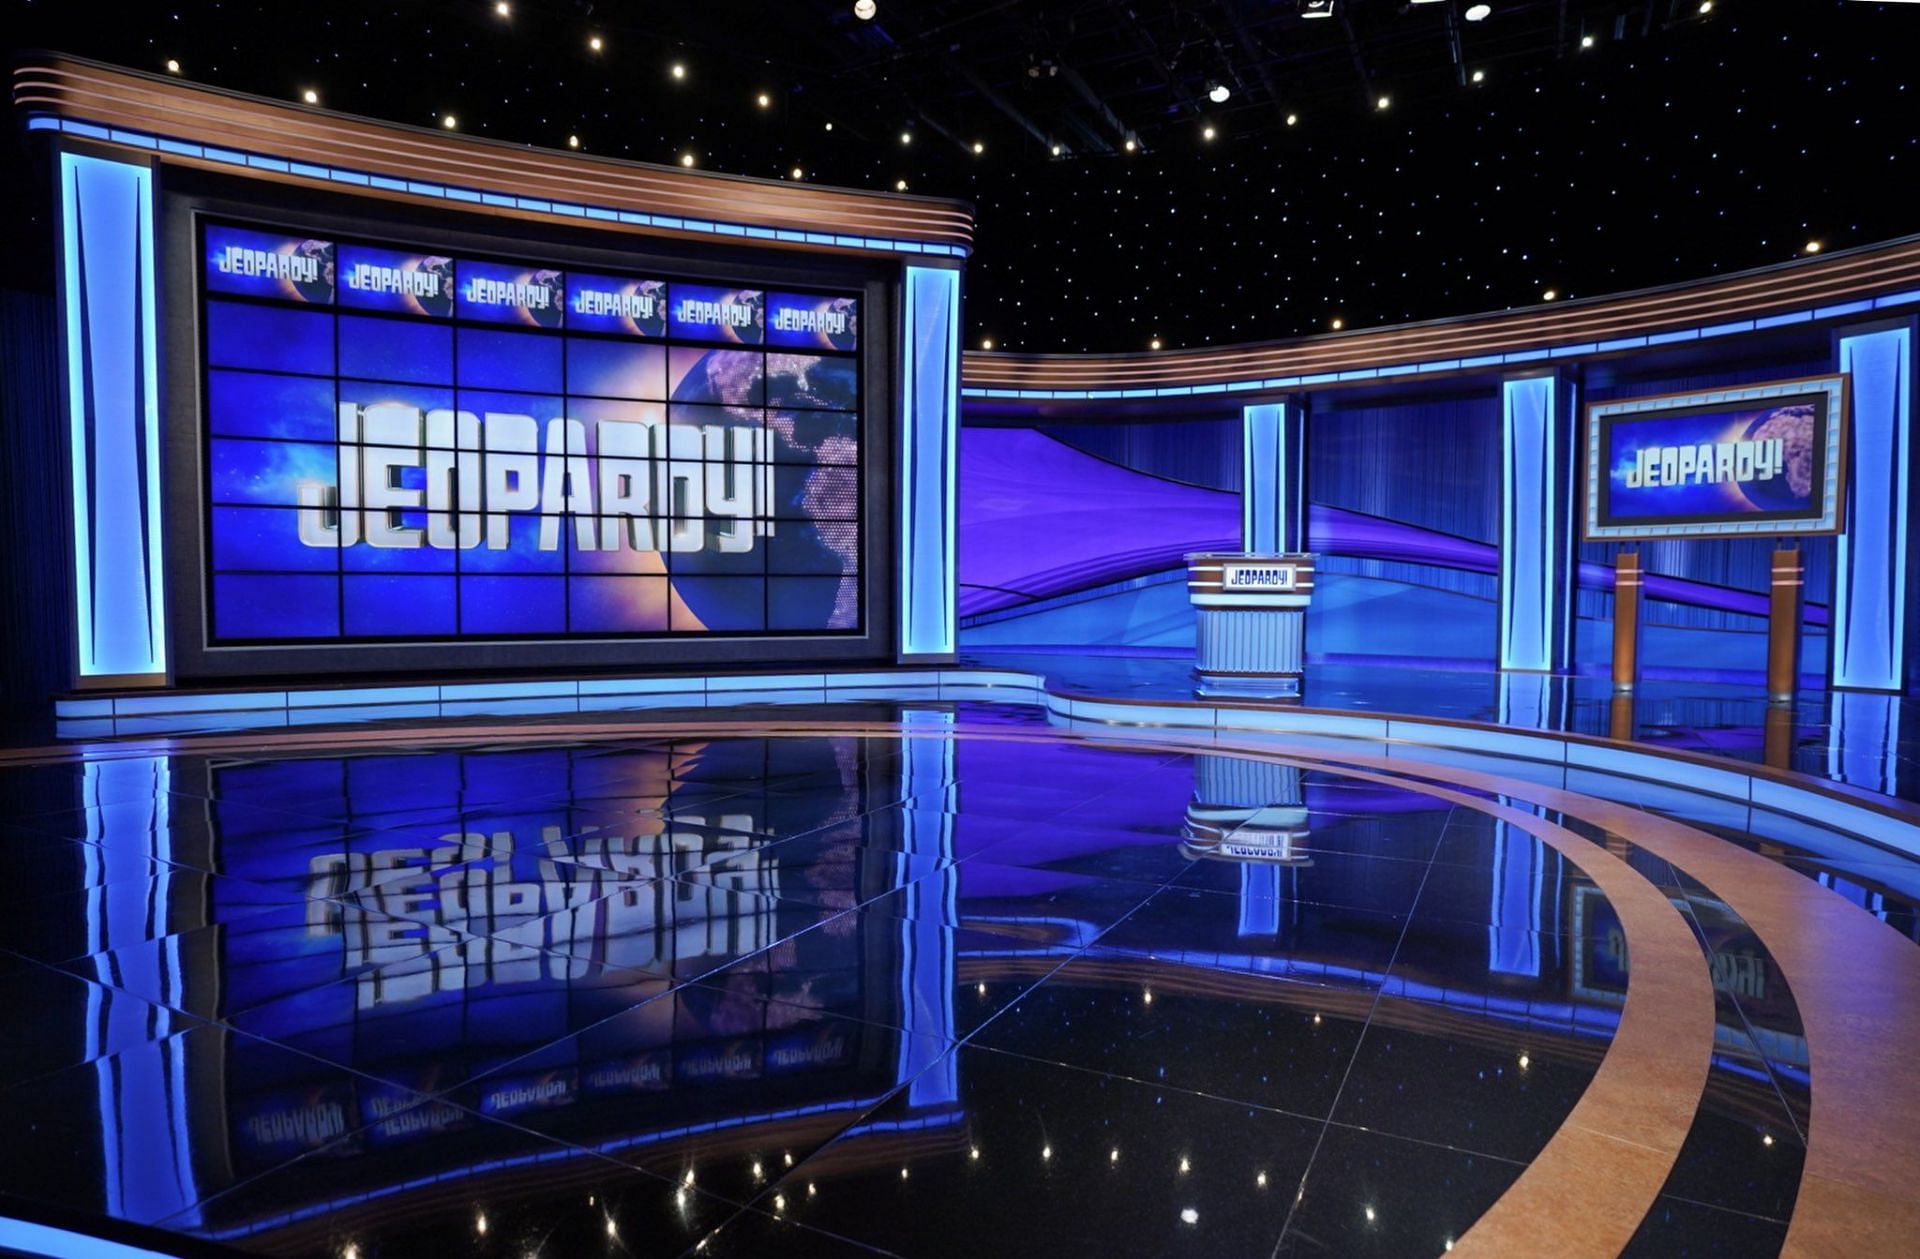 A still from Jeopardy! (Image via @KenJennings/X)